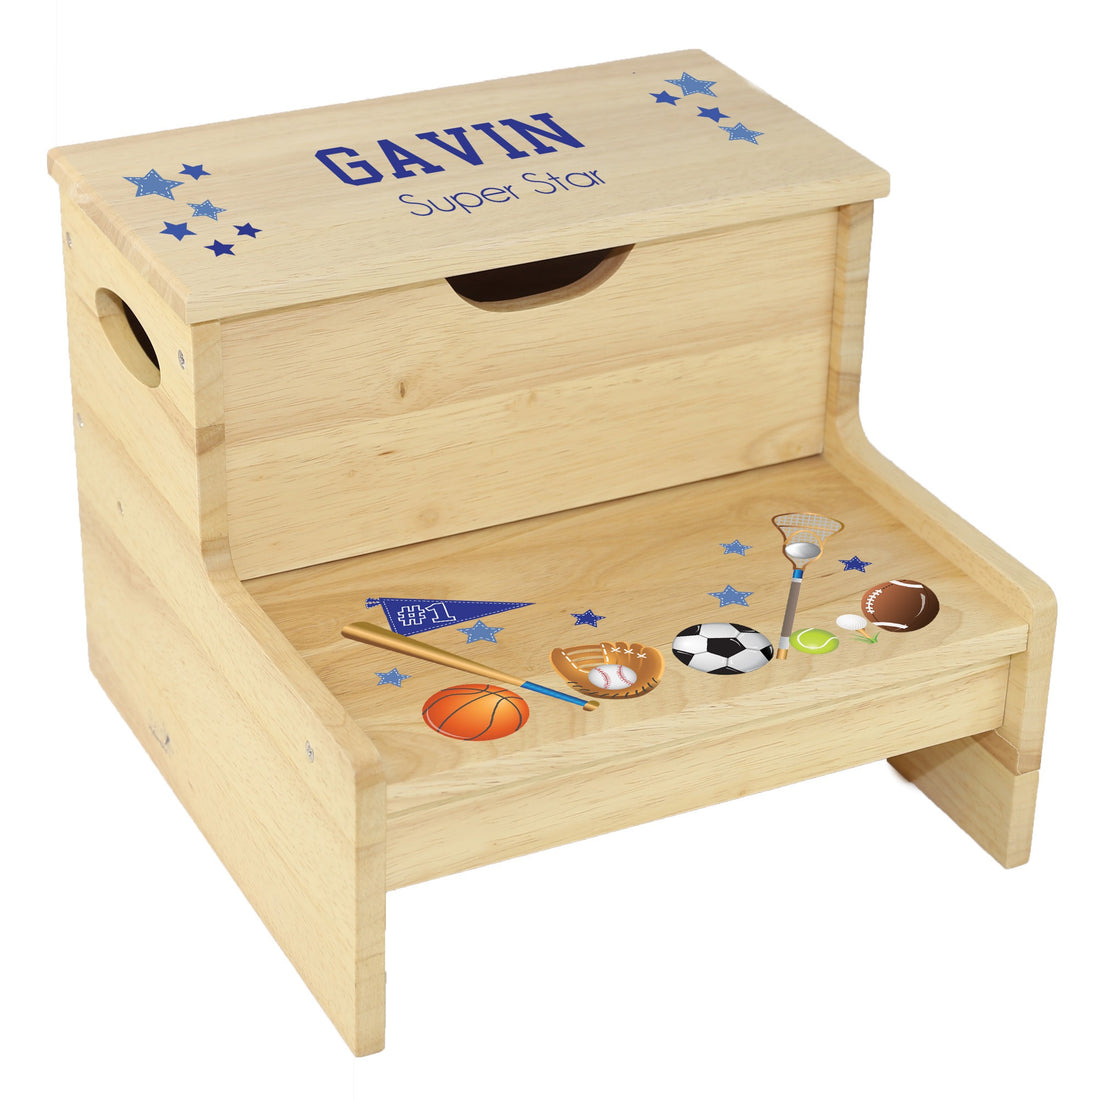 natural wood storage step stool sports design for boy